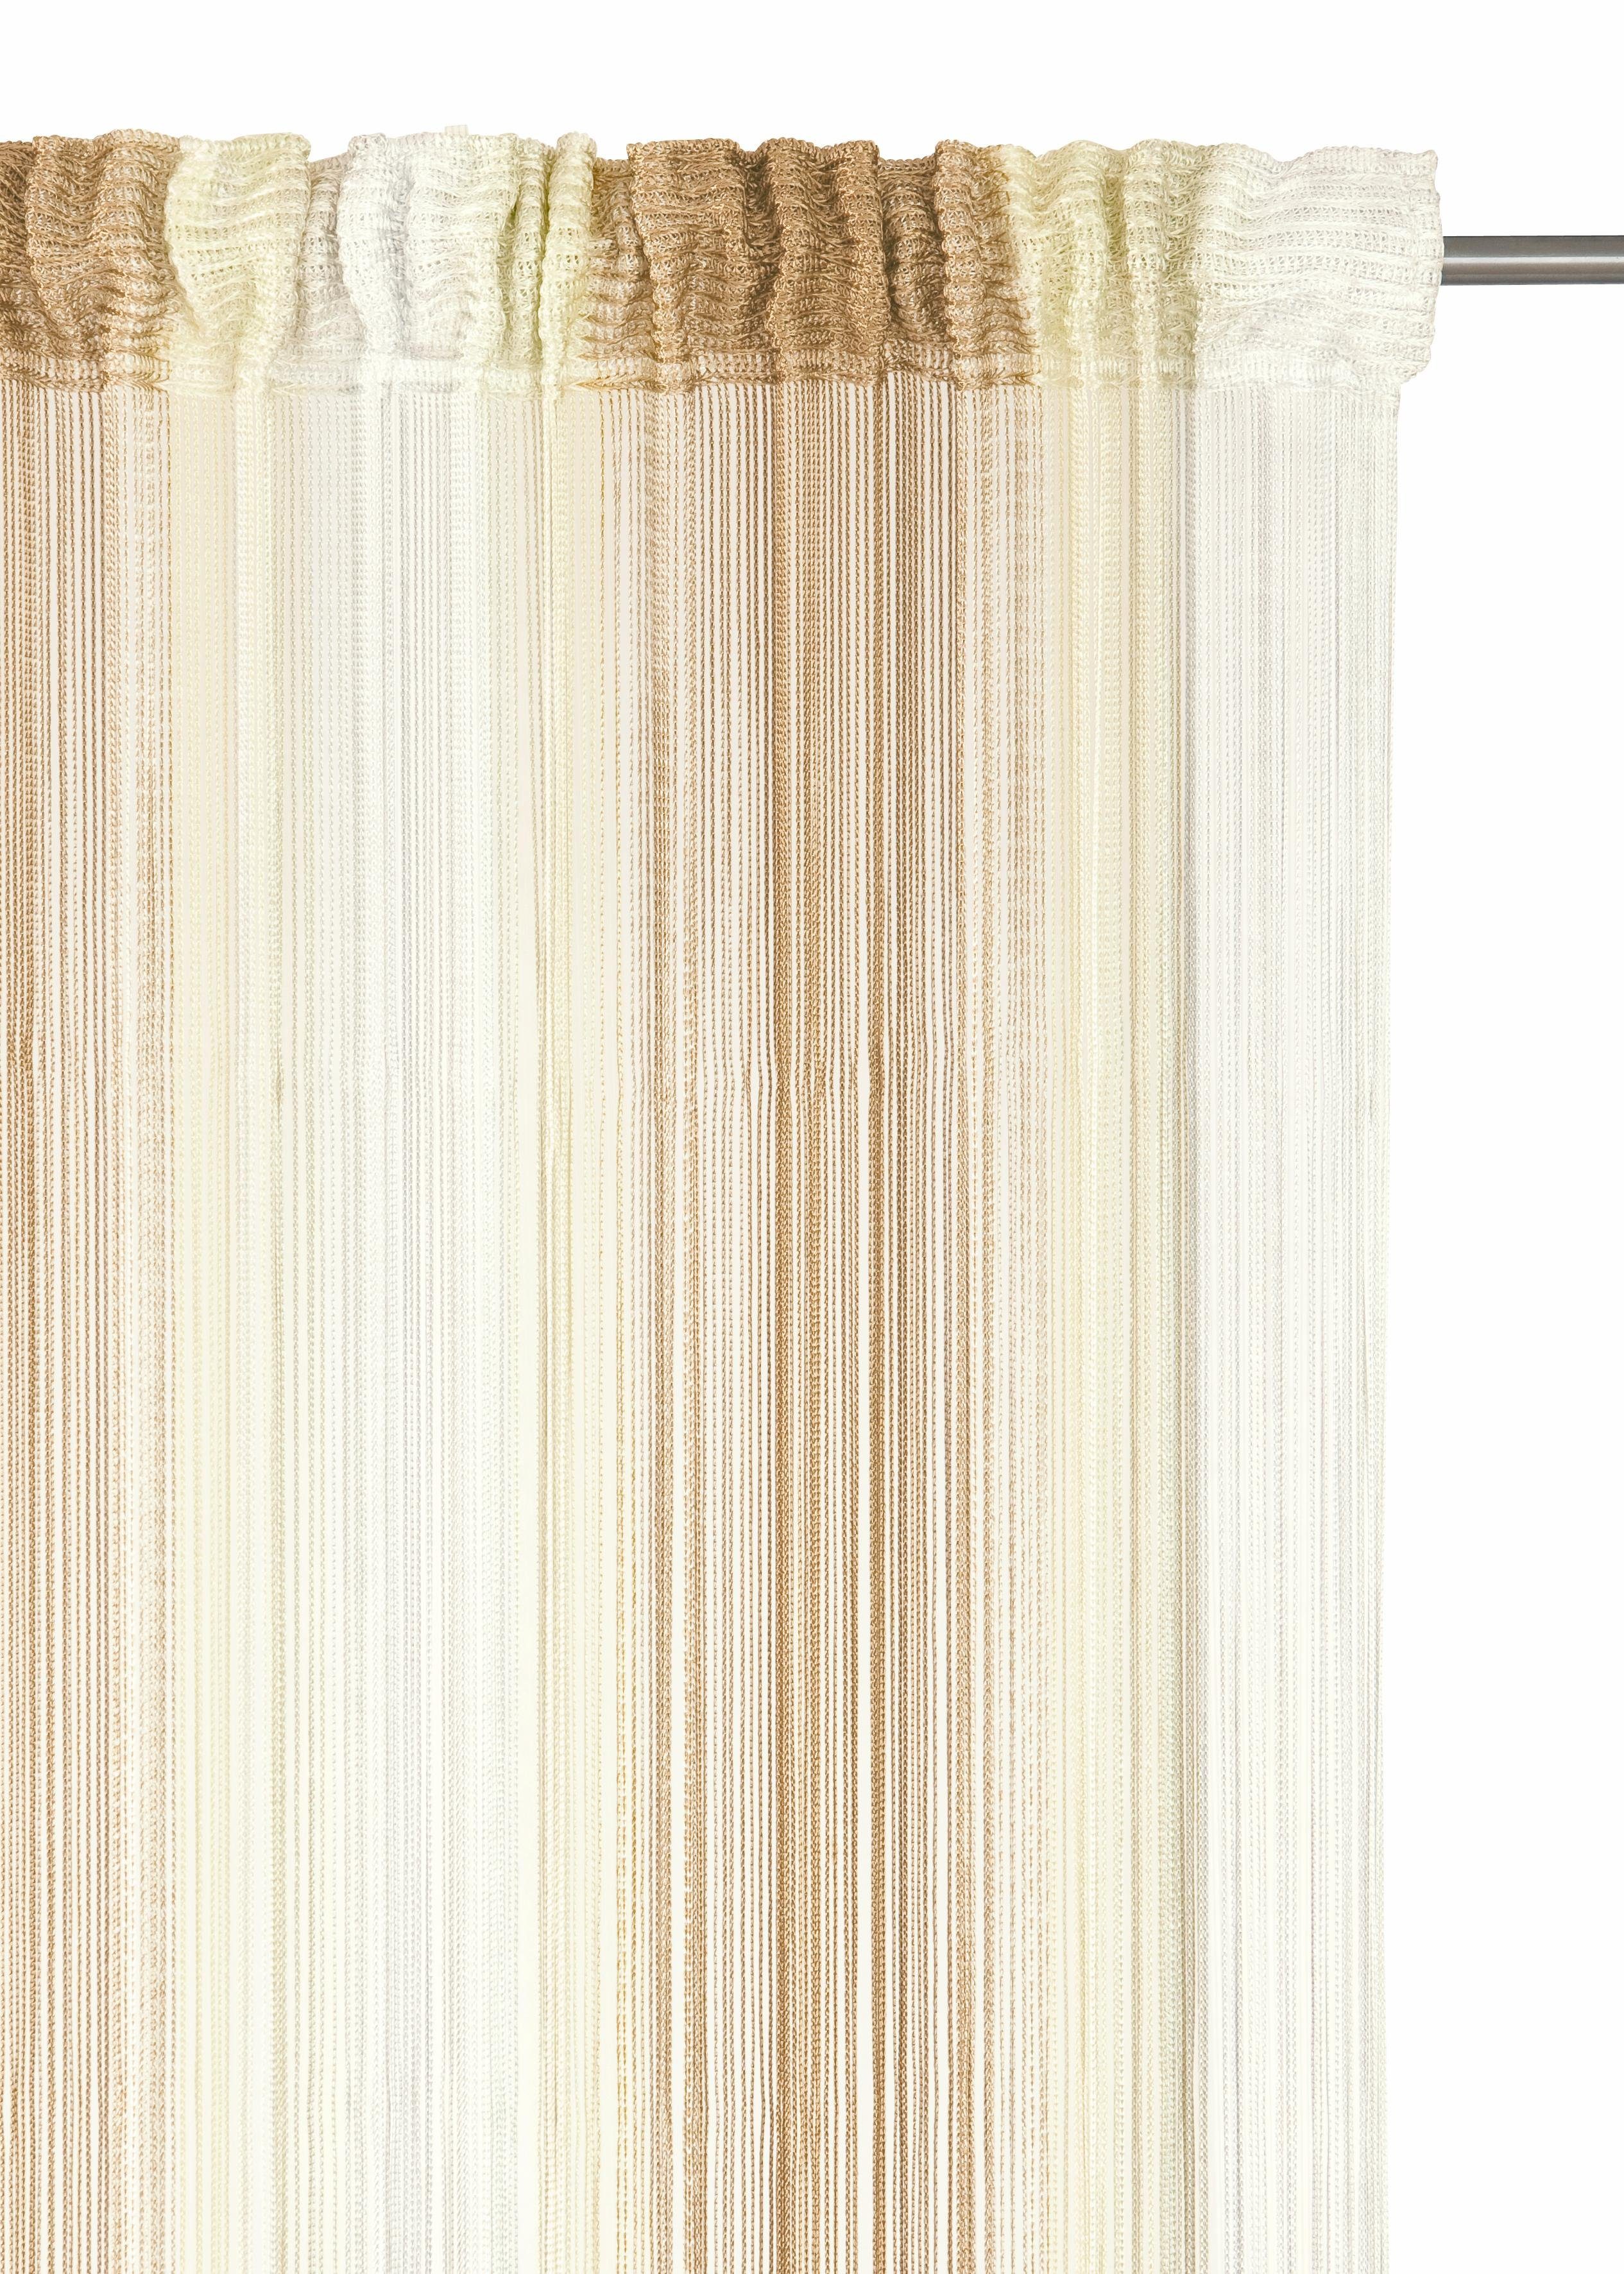 Fadengardine, St), Gardine, Insektenschutz, Fadenvorhang (1 Multifunktionsband kürzbar transparent, halbtransparent, Weckbrodt, Rebecca, champagner/karamell